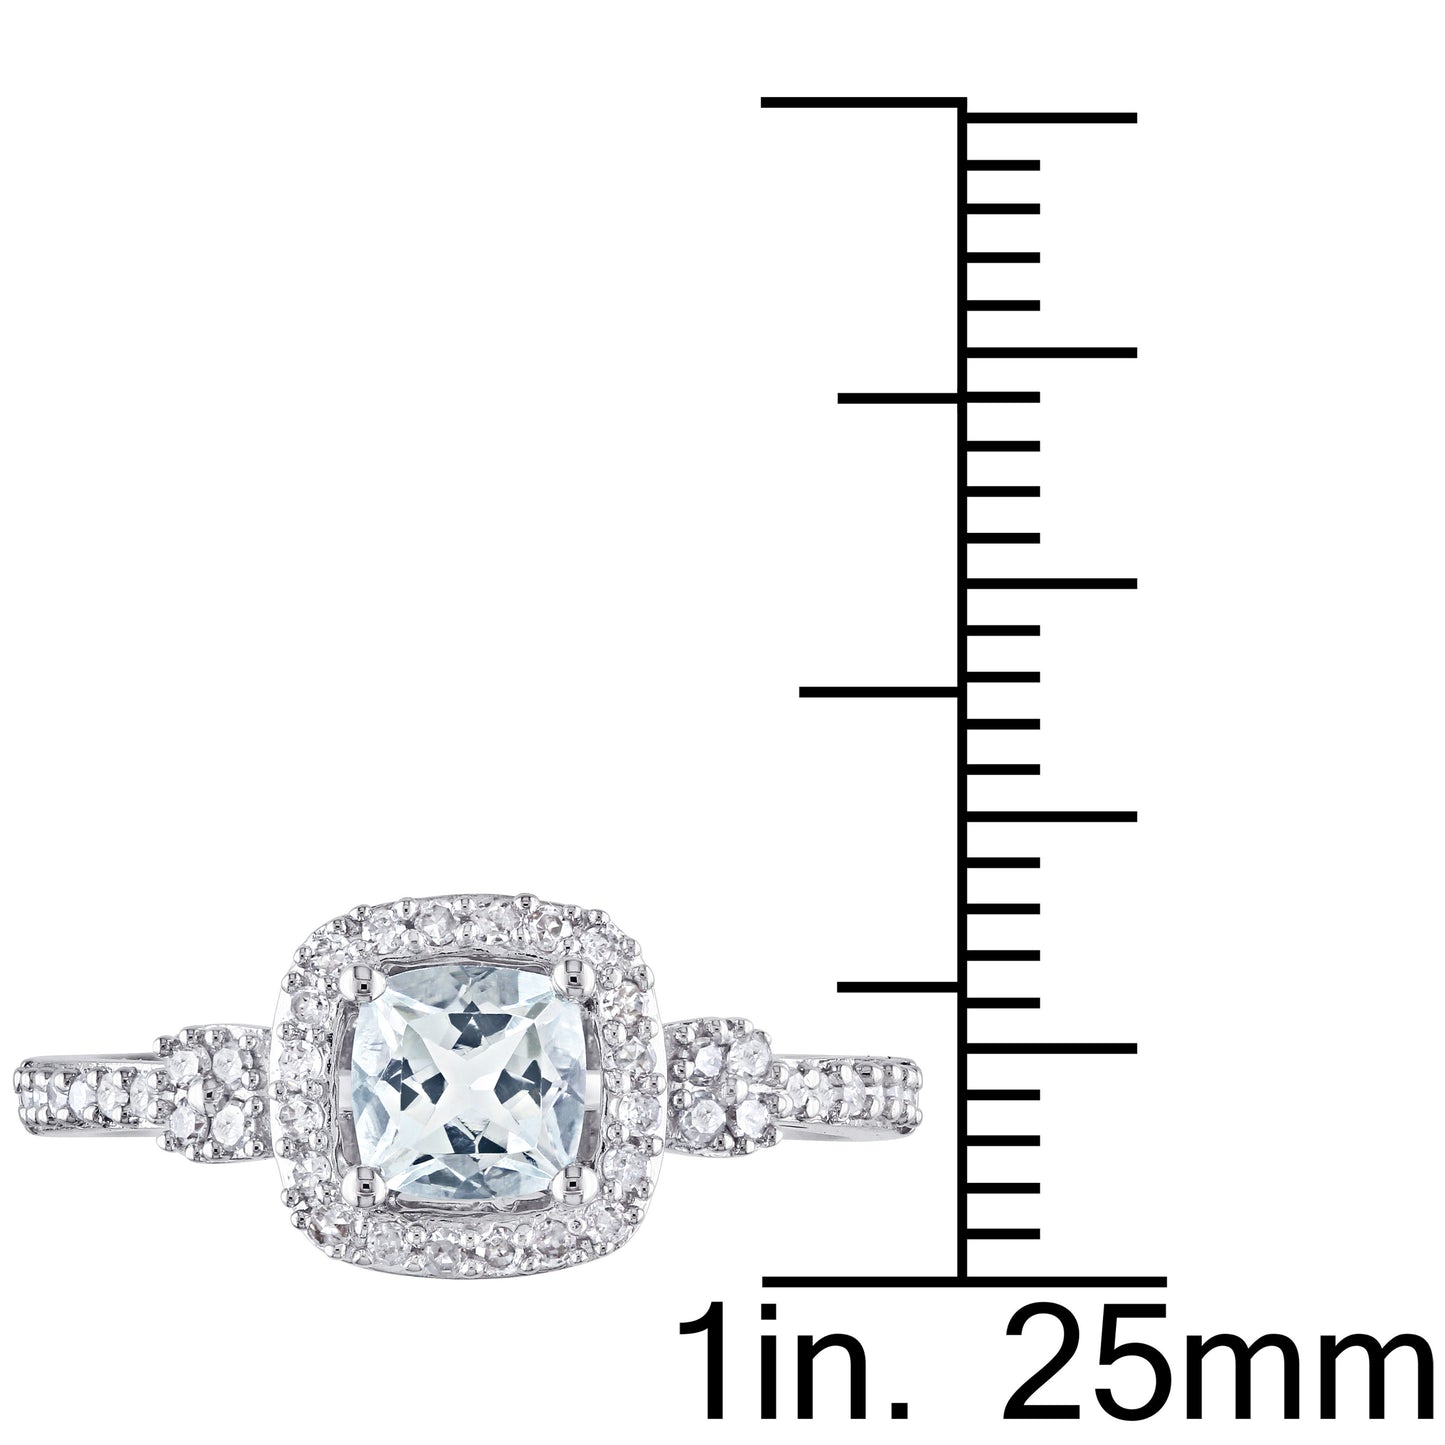 Julie Leah Aquamarine & Diamonds Halo Ring in 10k White Gold